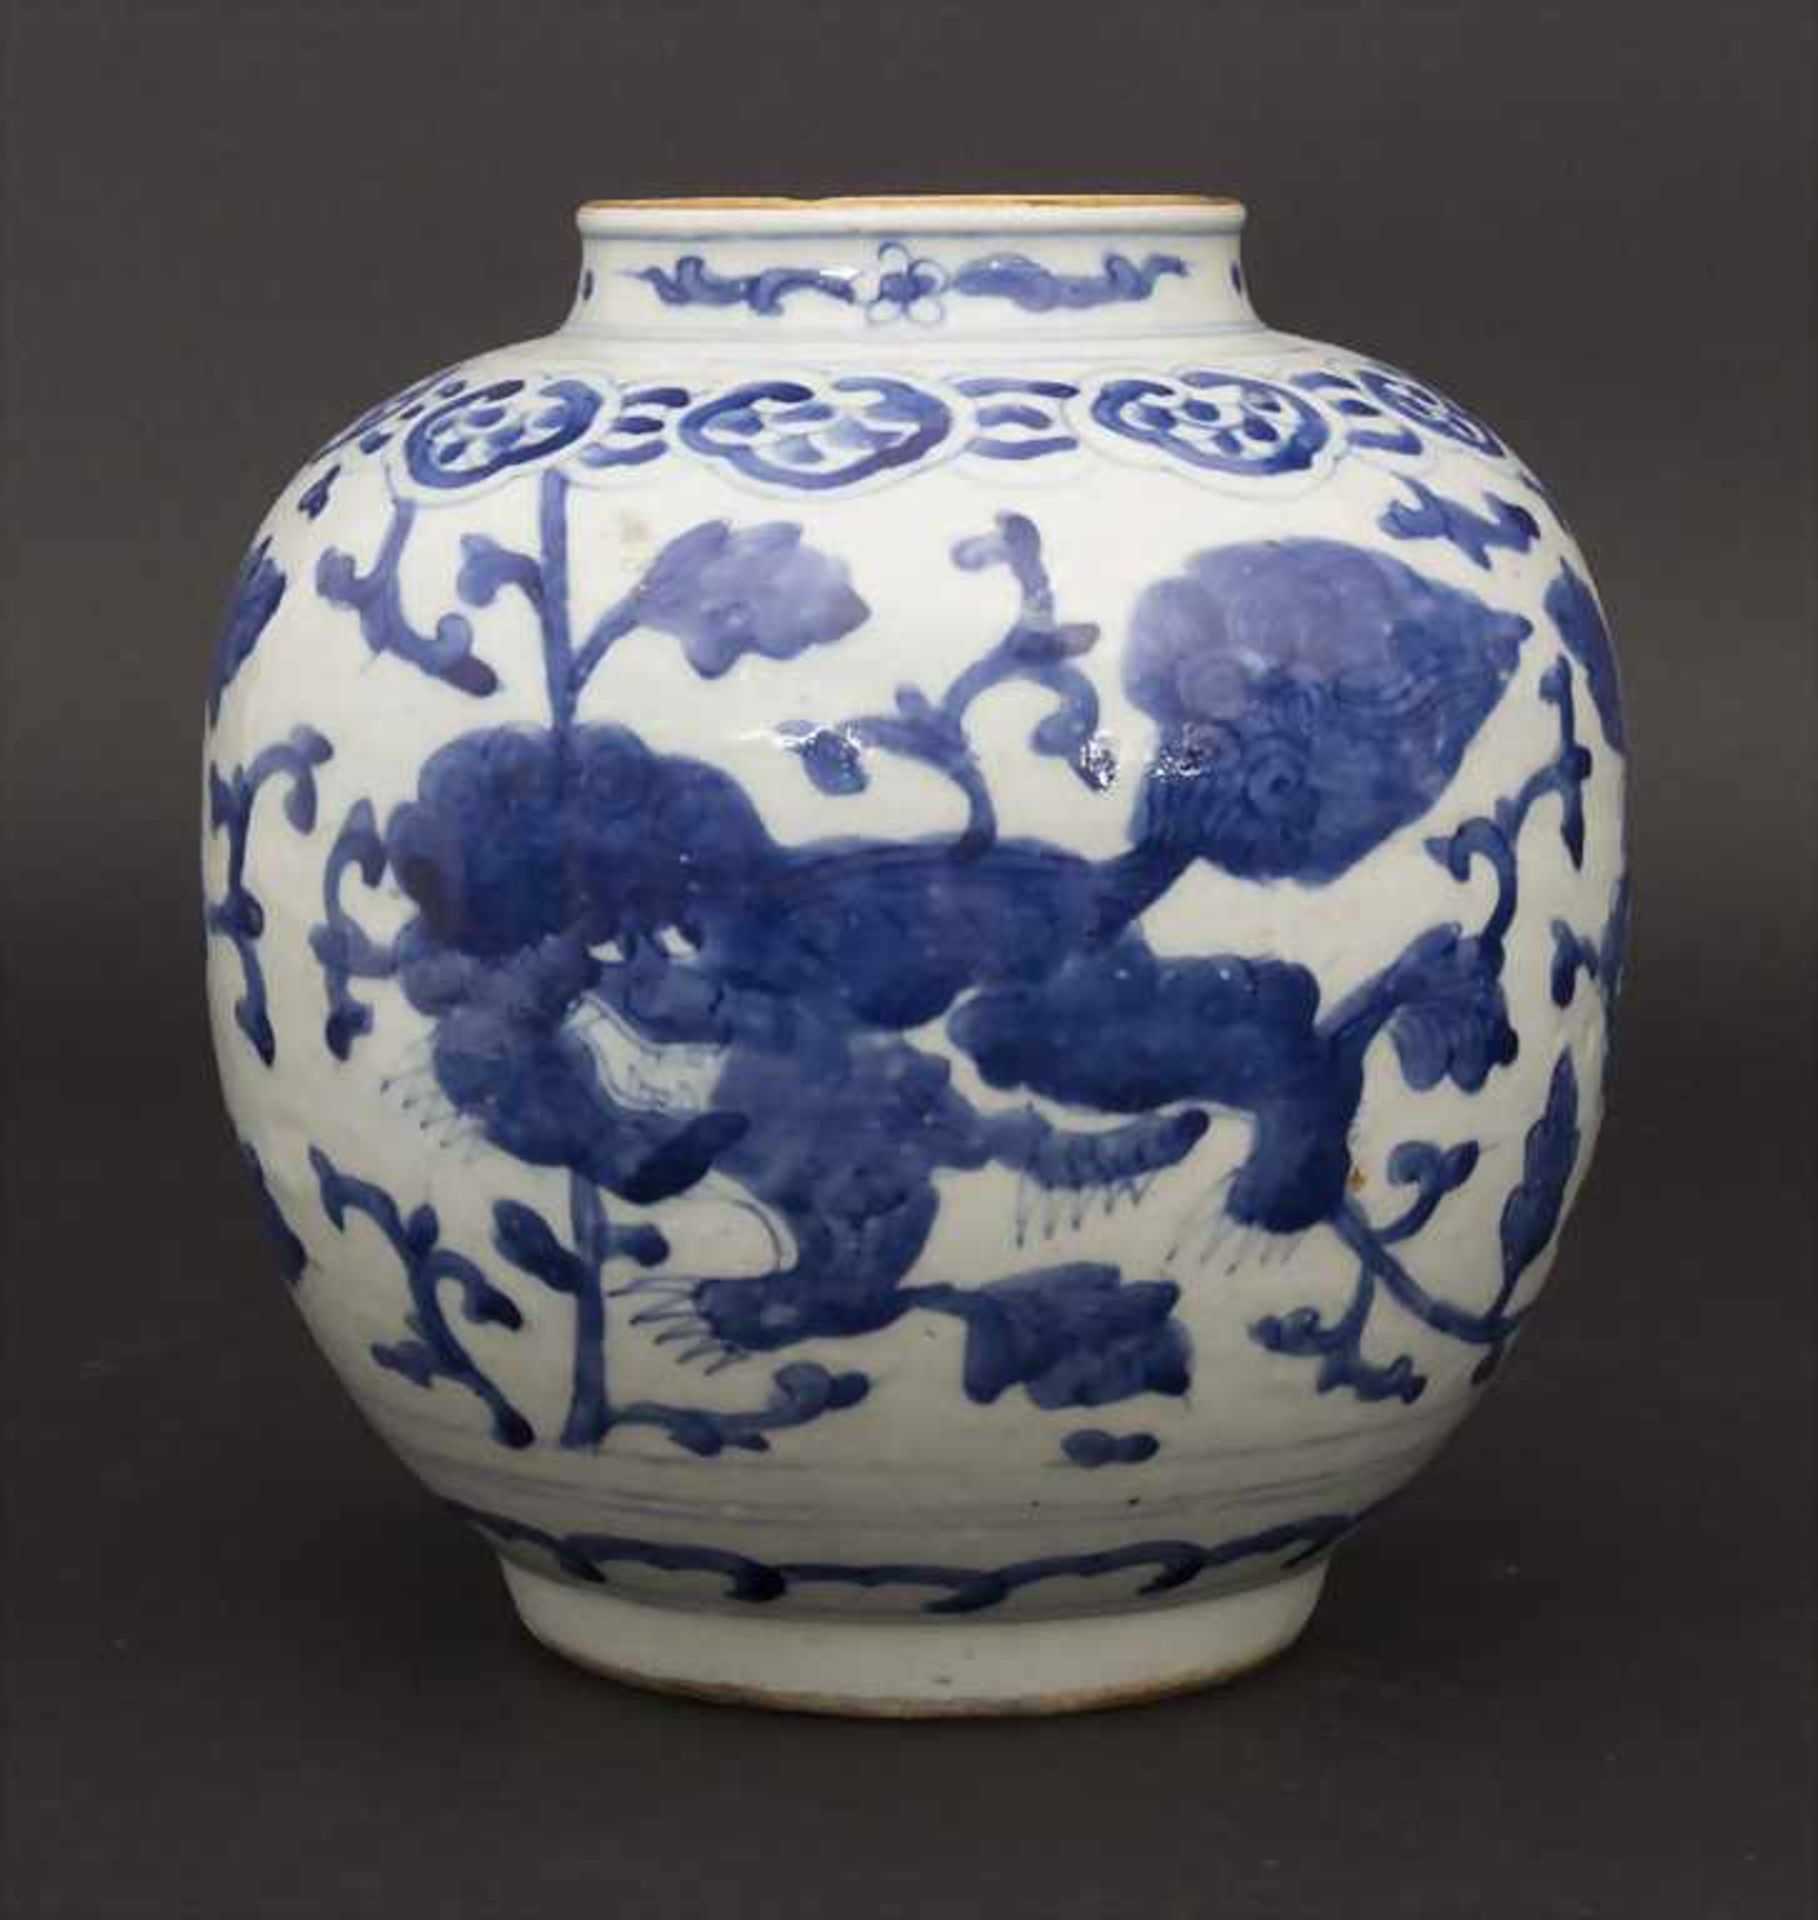 Schultertopf mit unterglasurblauer Malerei, Qing Dynastie, China, 18./19. Jh.